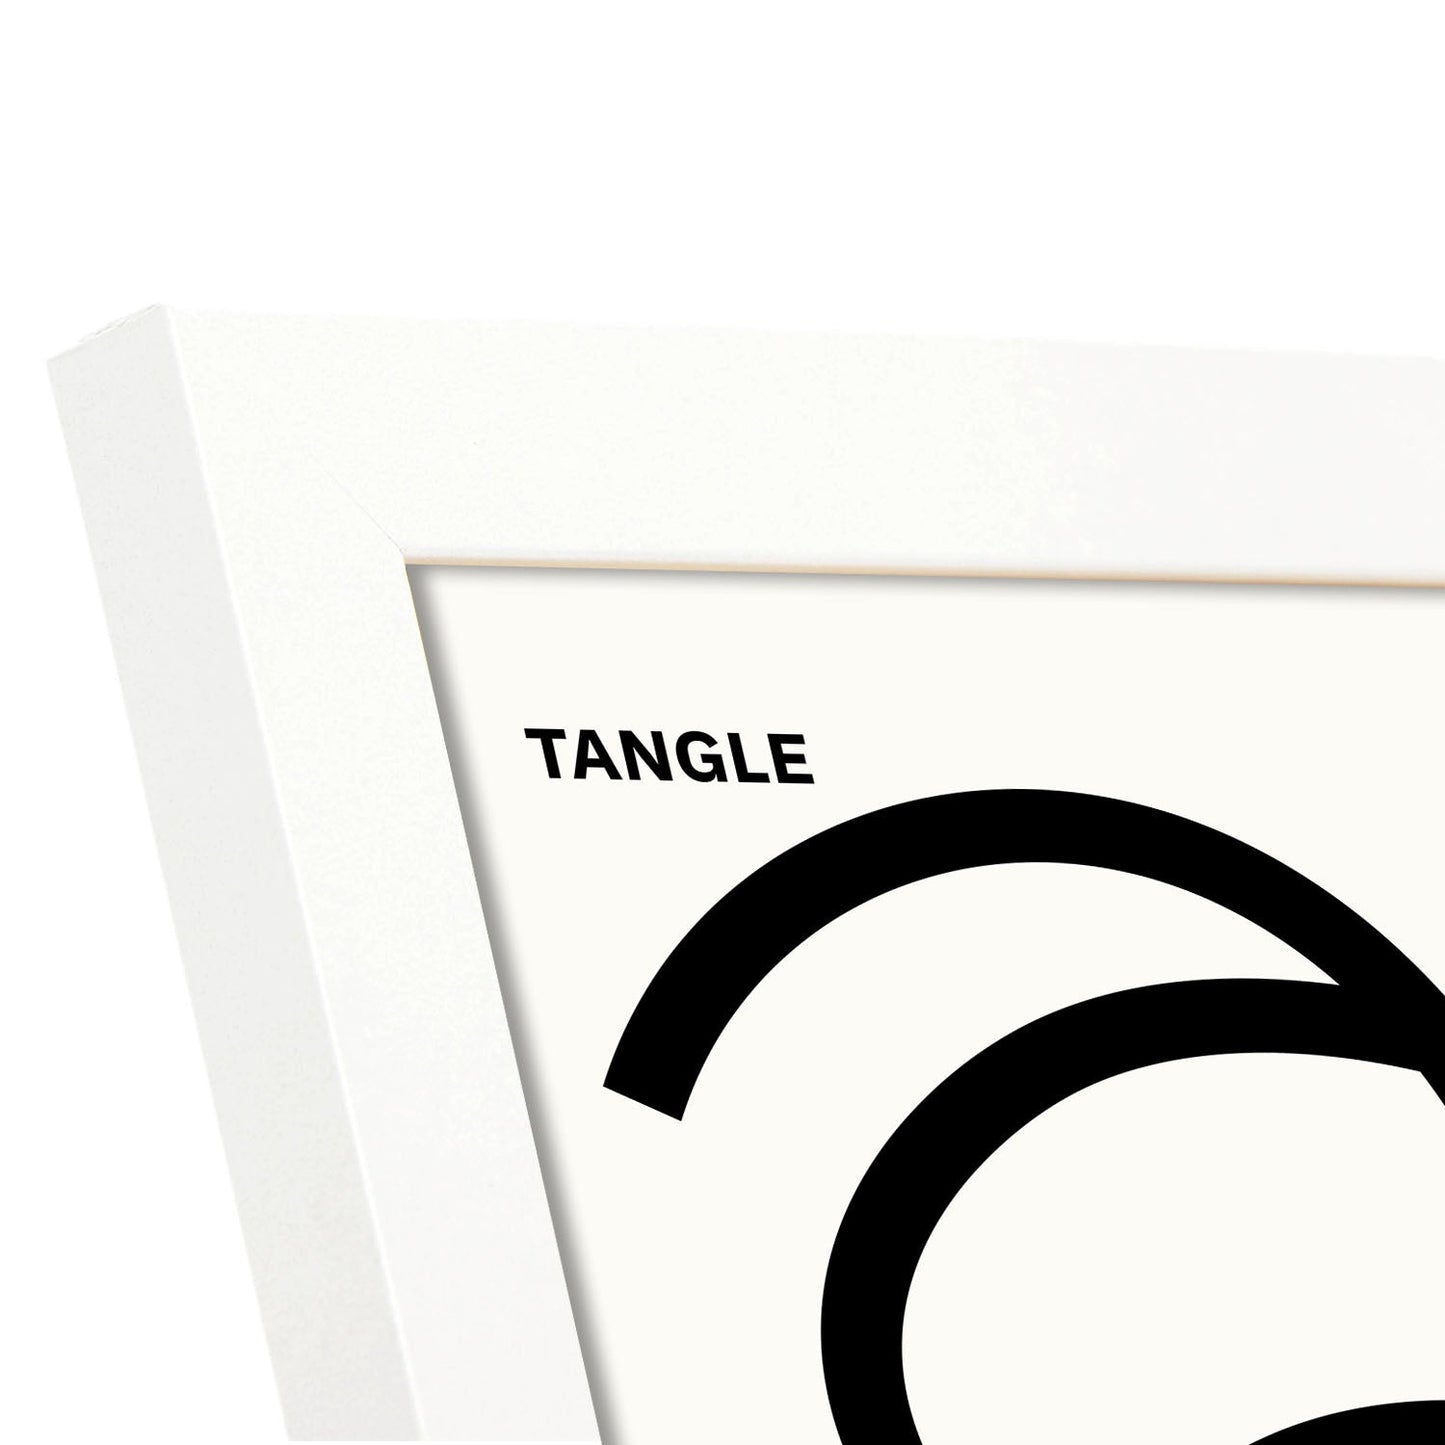 Tangle-Artwork-Nacnic-Nacnic Estudio SL